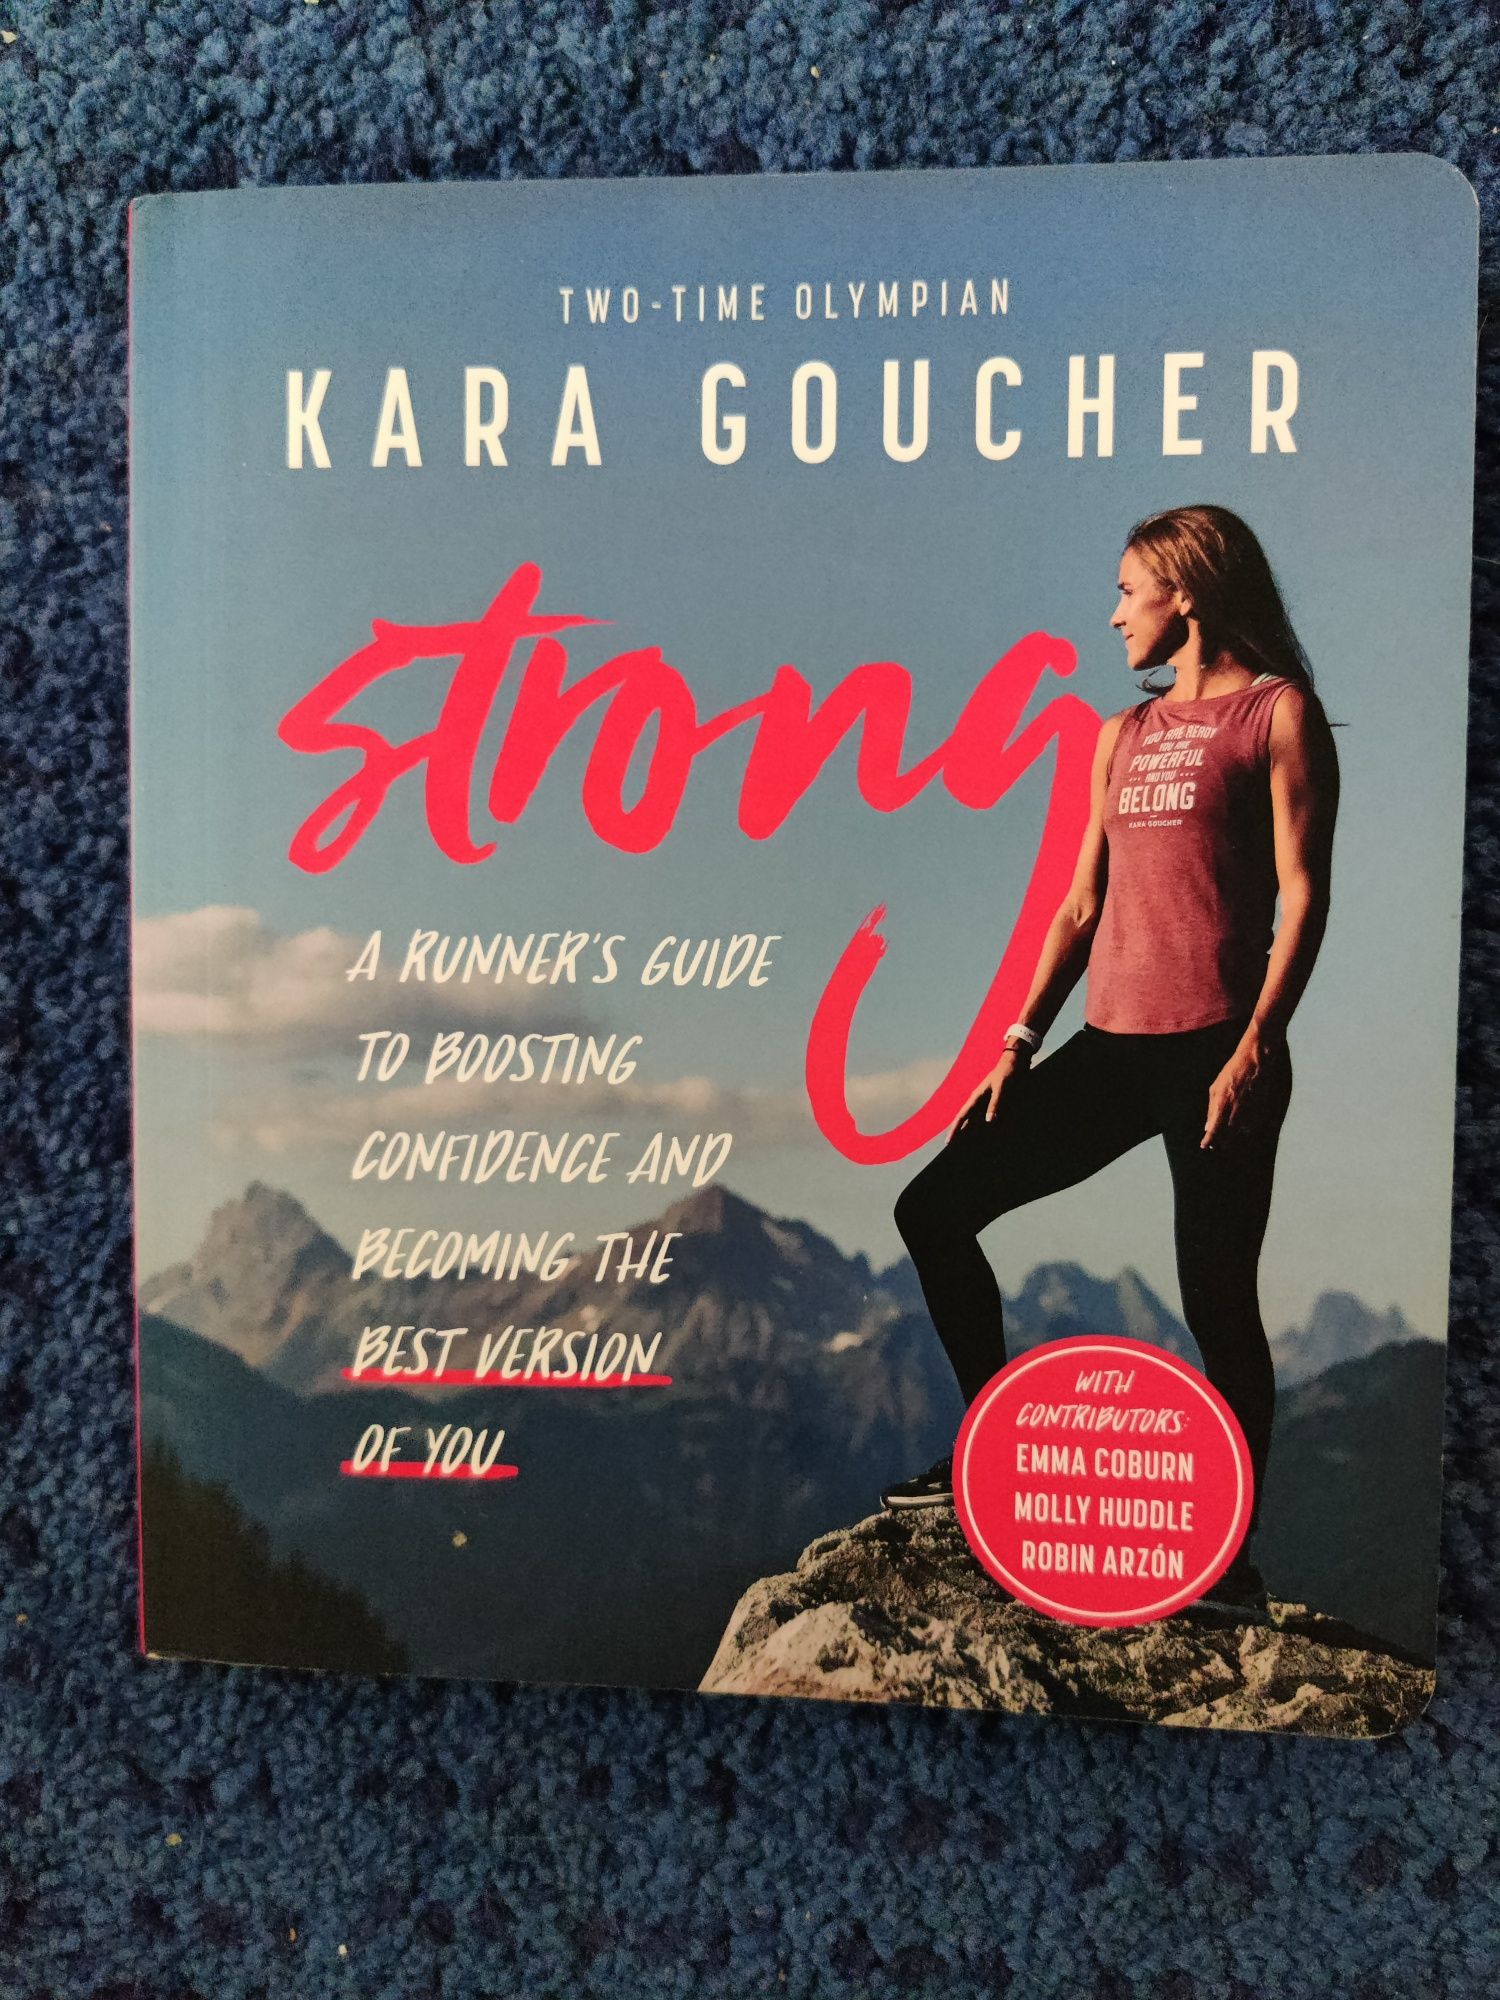 Livro "Strong" de Kara Goucher